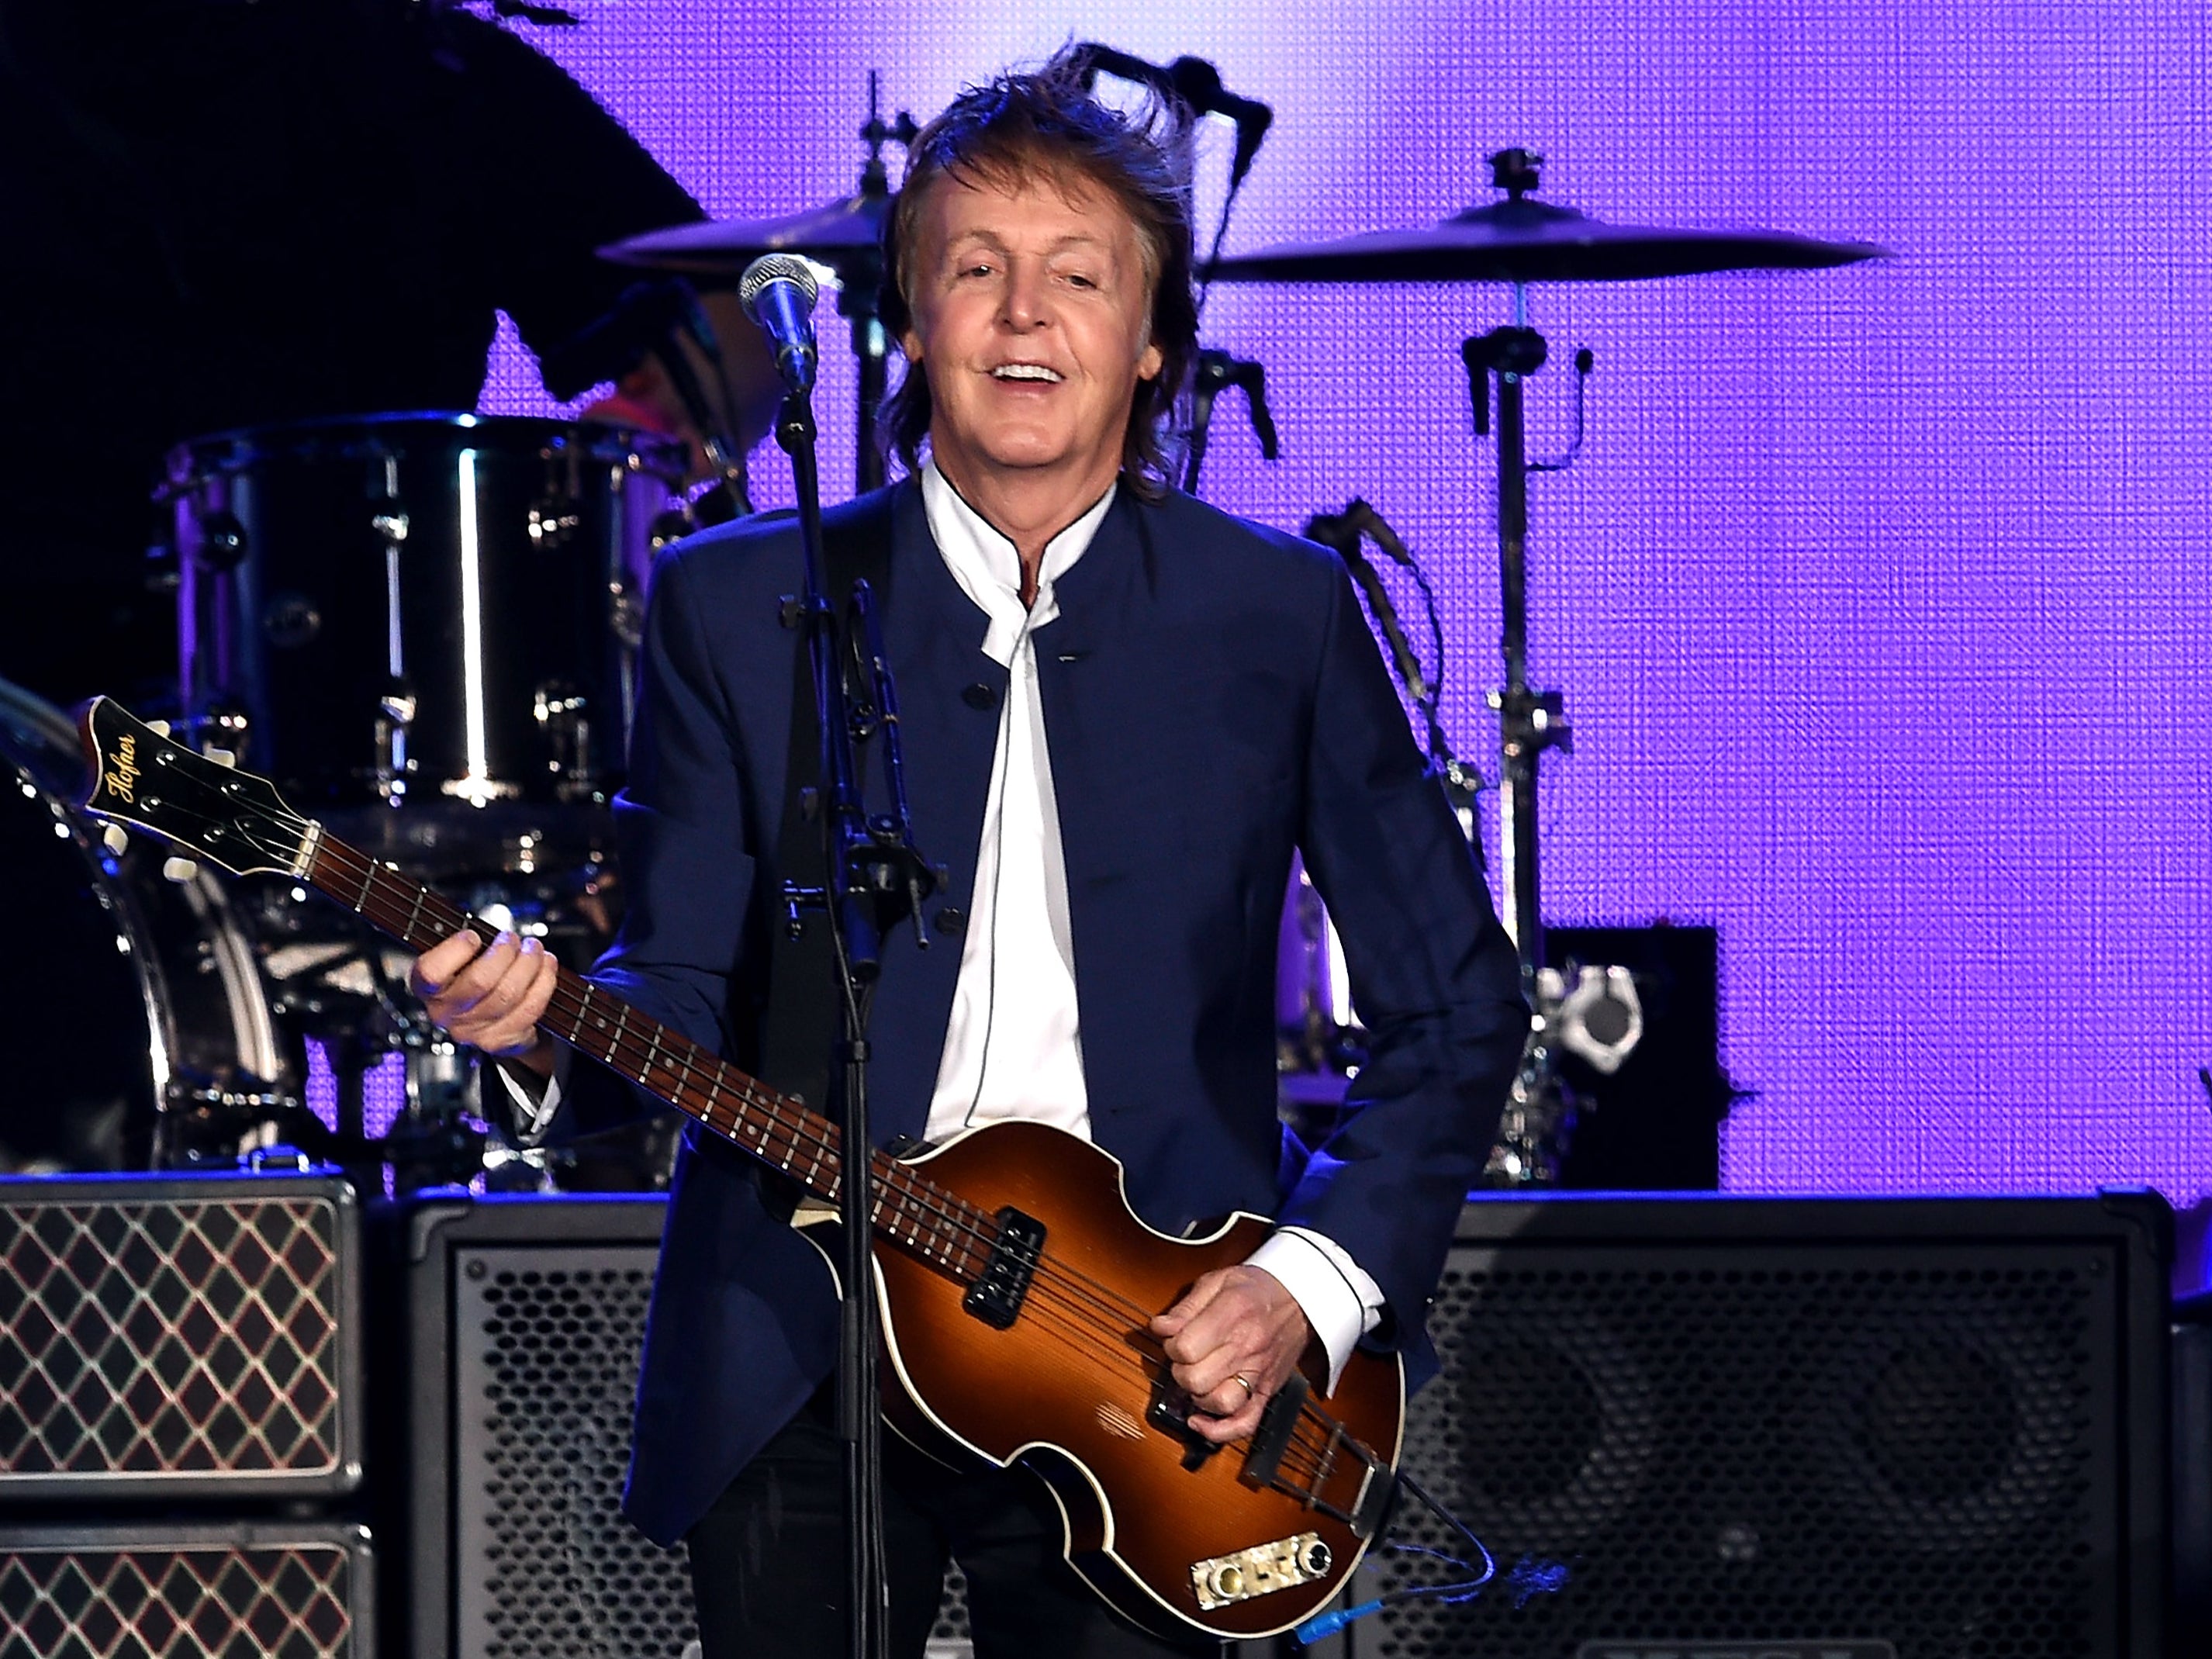 McCartney is the UK’s first billionaire musician